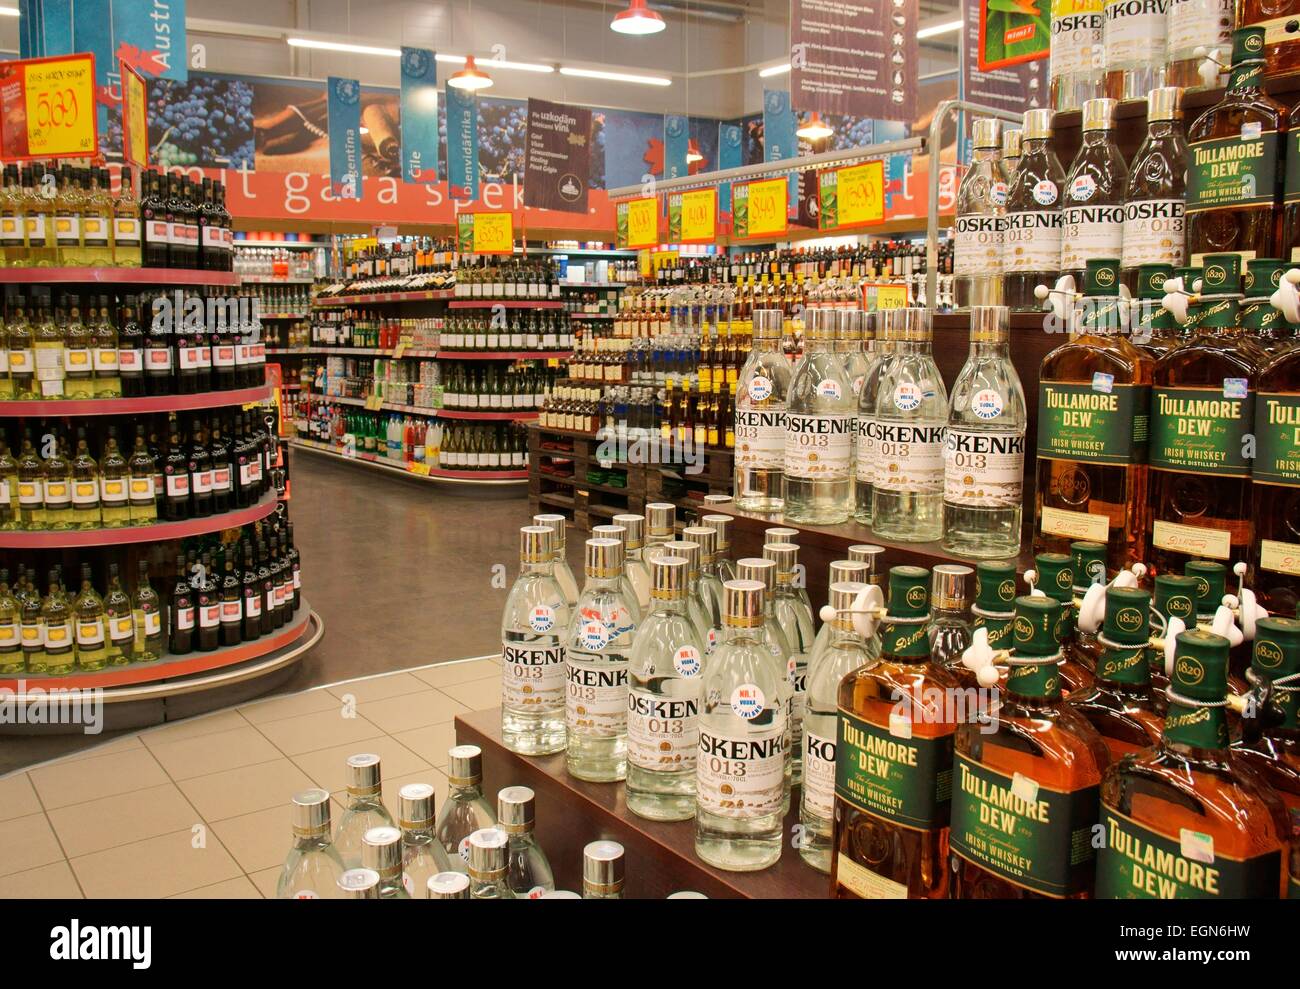 Riga Latvia. Rimi hypermarket north city centre store.  Supermarket aisle displays. Alcohol, vodka, whiskey spirit bottle sales Stock Photo